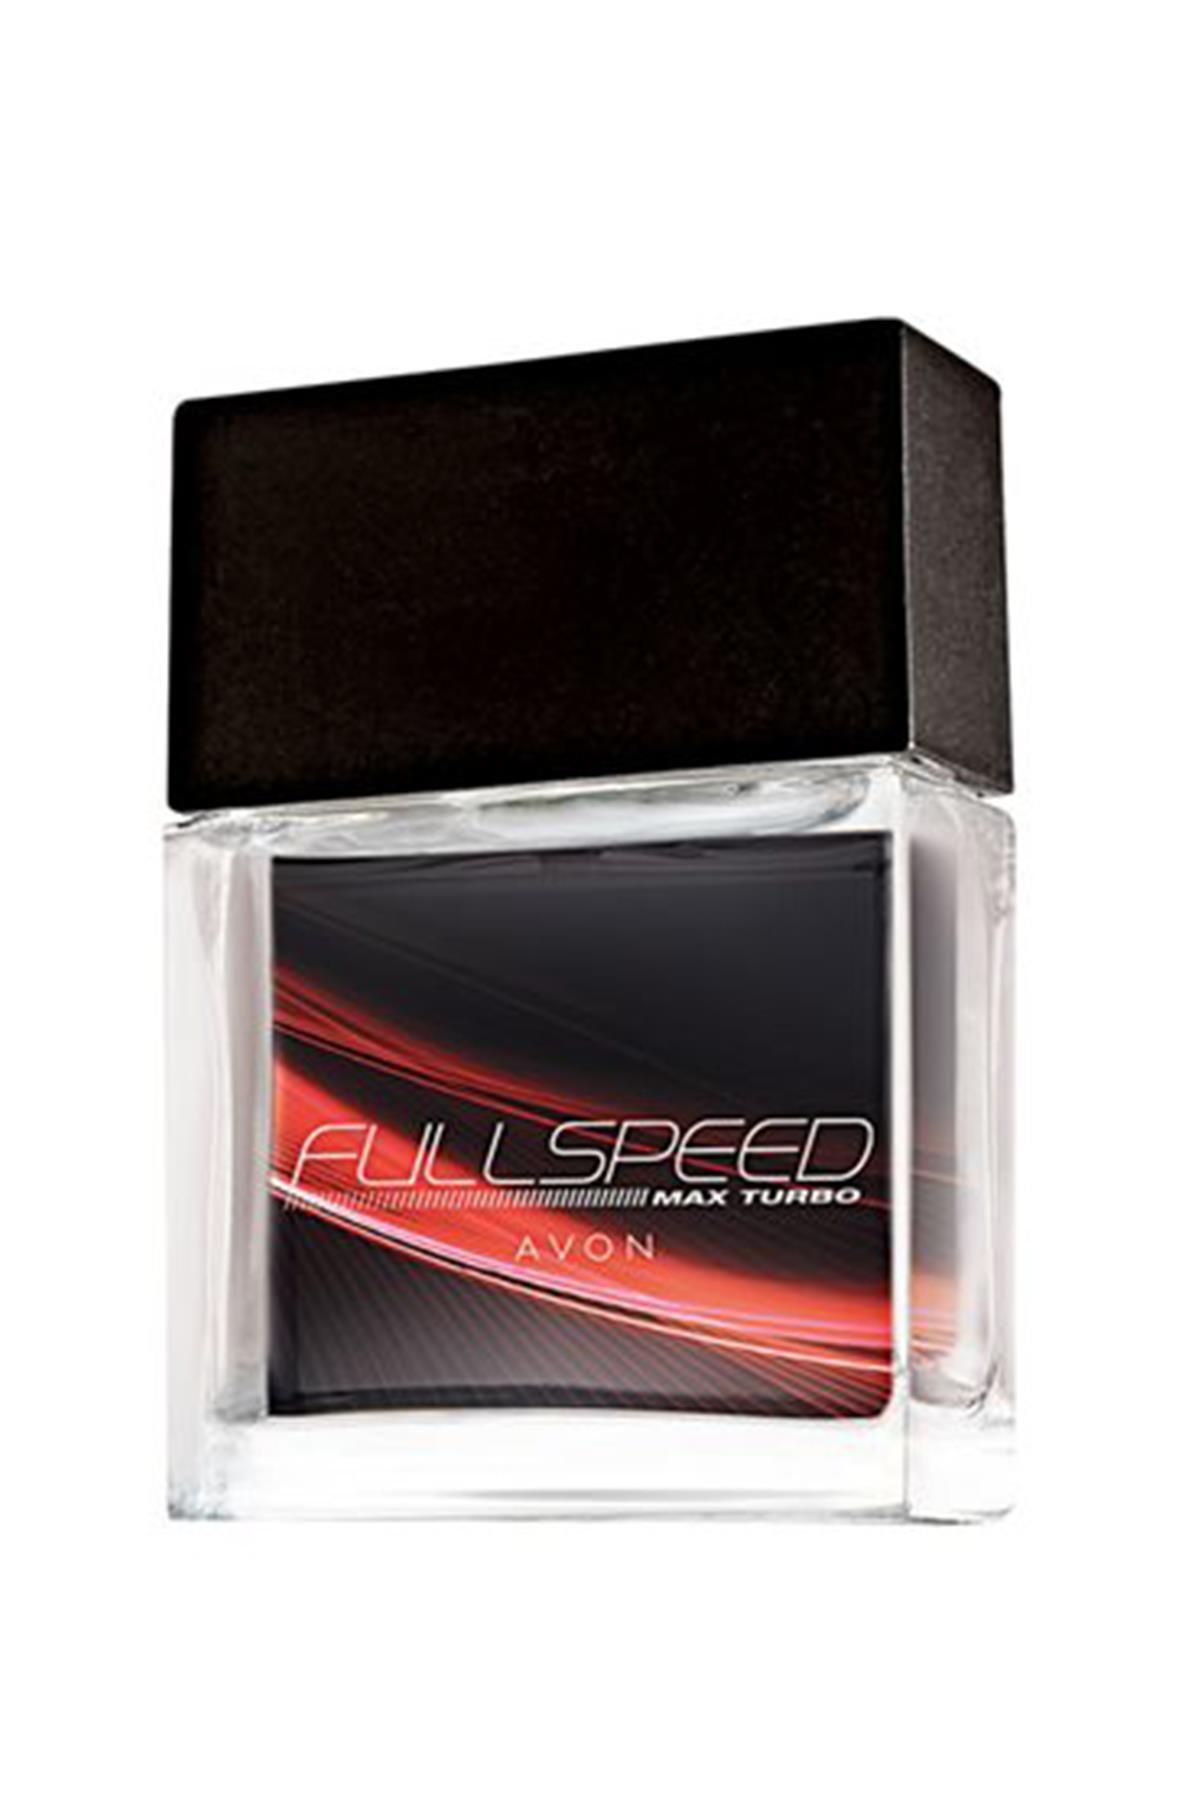 Avon Full Speed Max Turbo Erkek Parfüm Edt 30 Ml.